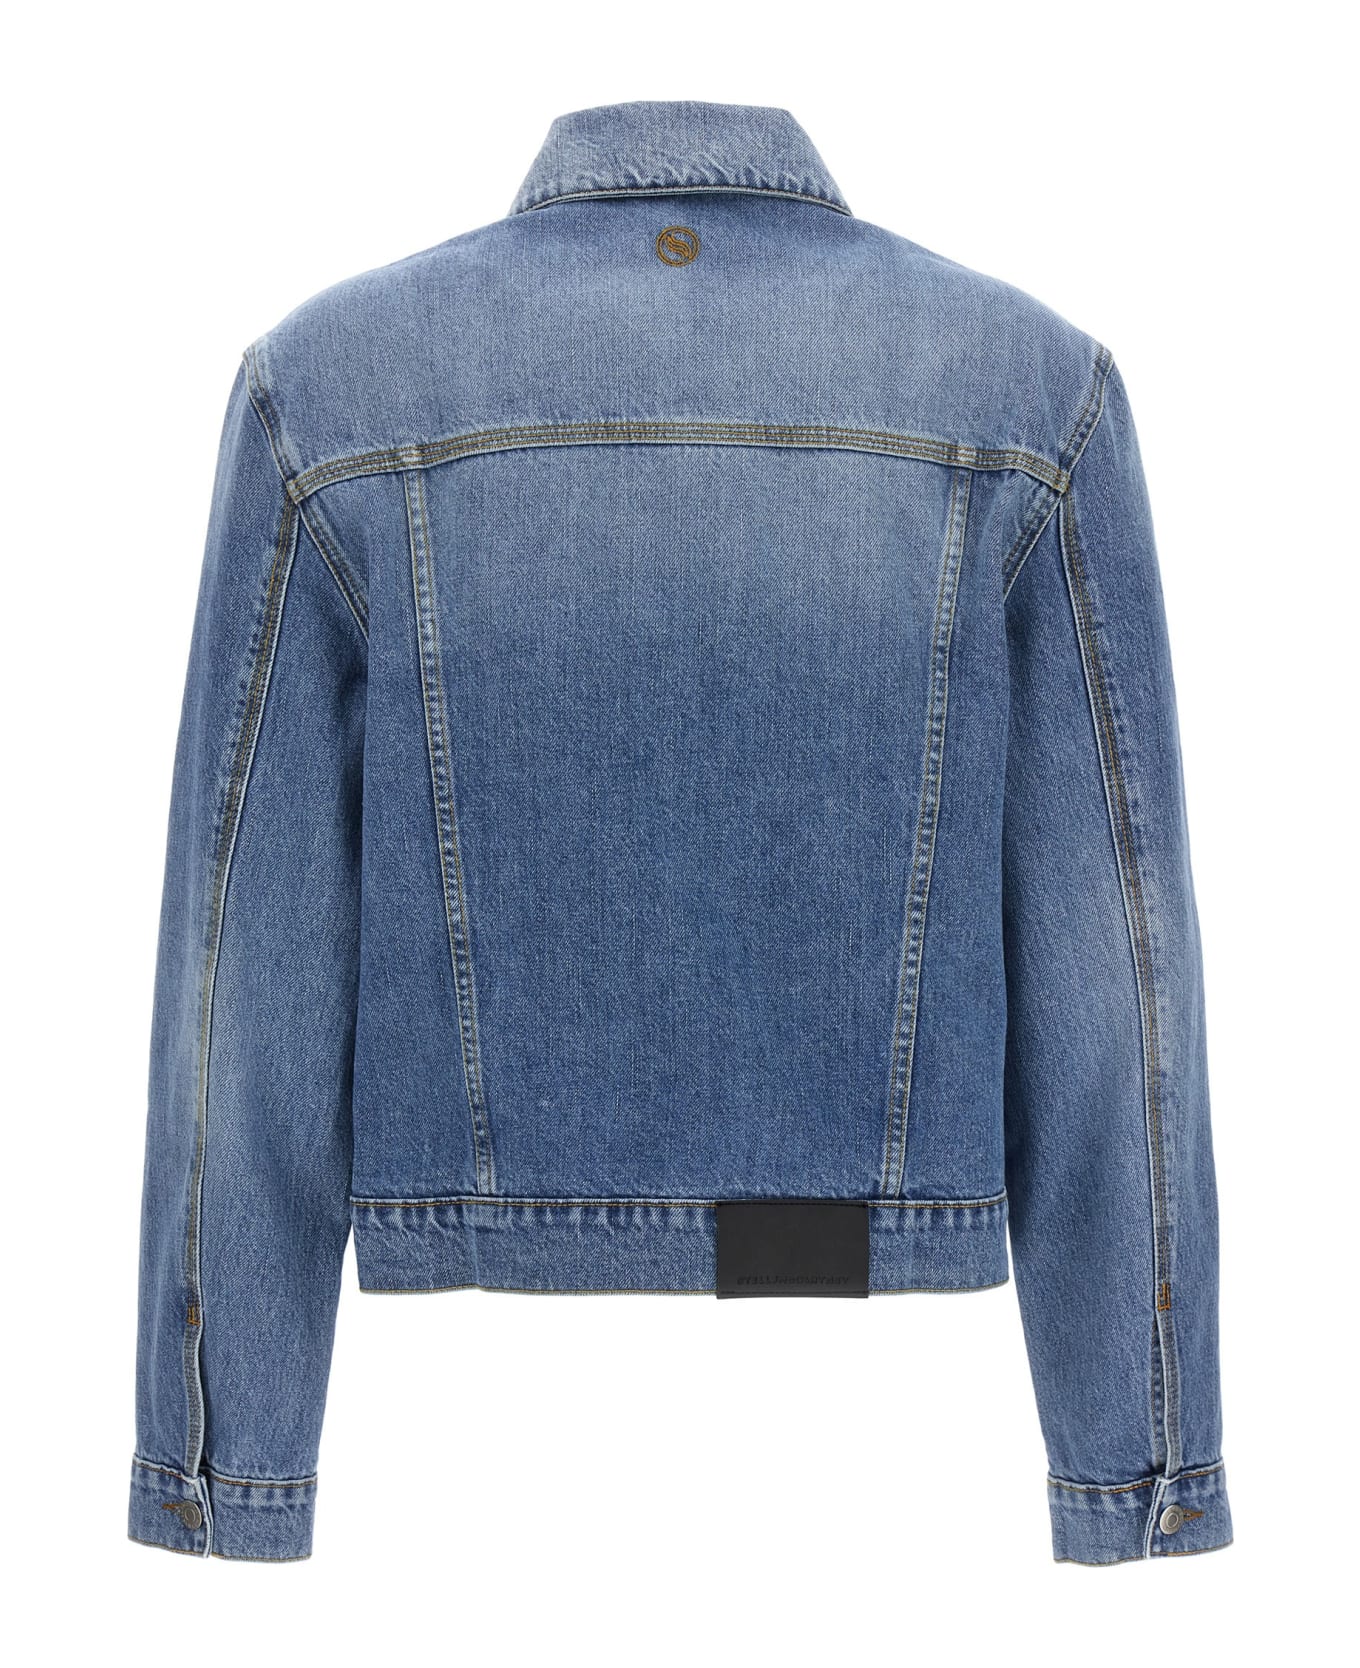 Stella McCartney Iconic Falabella Chain Denim Jacket - Mid Vintage Blue